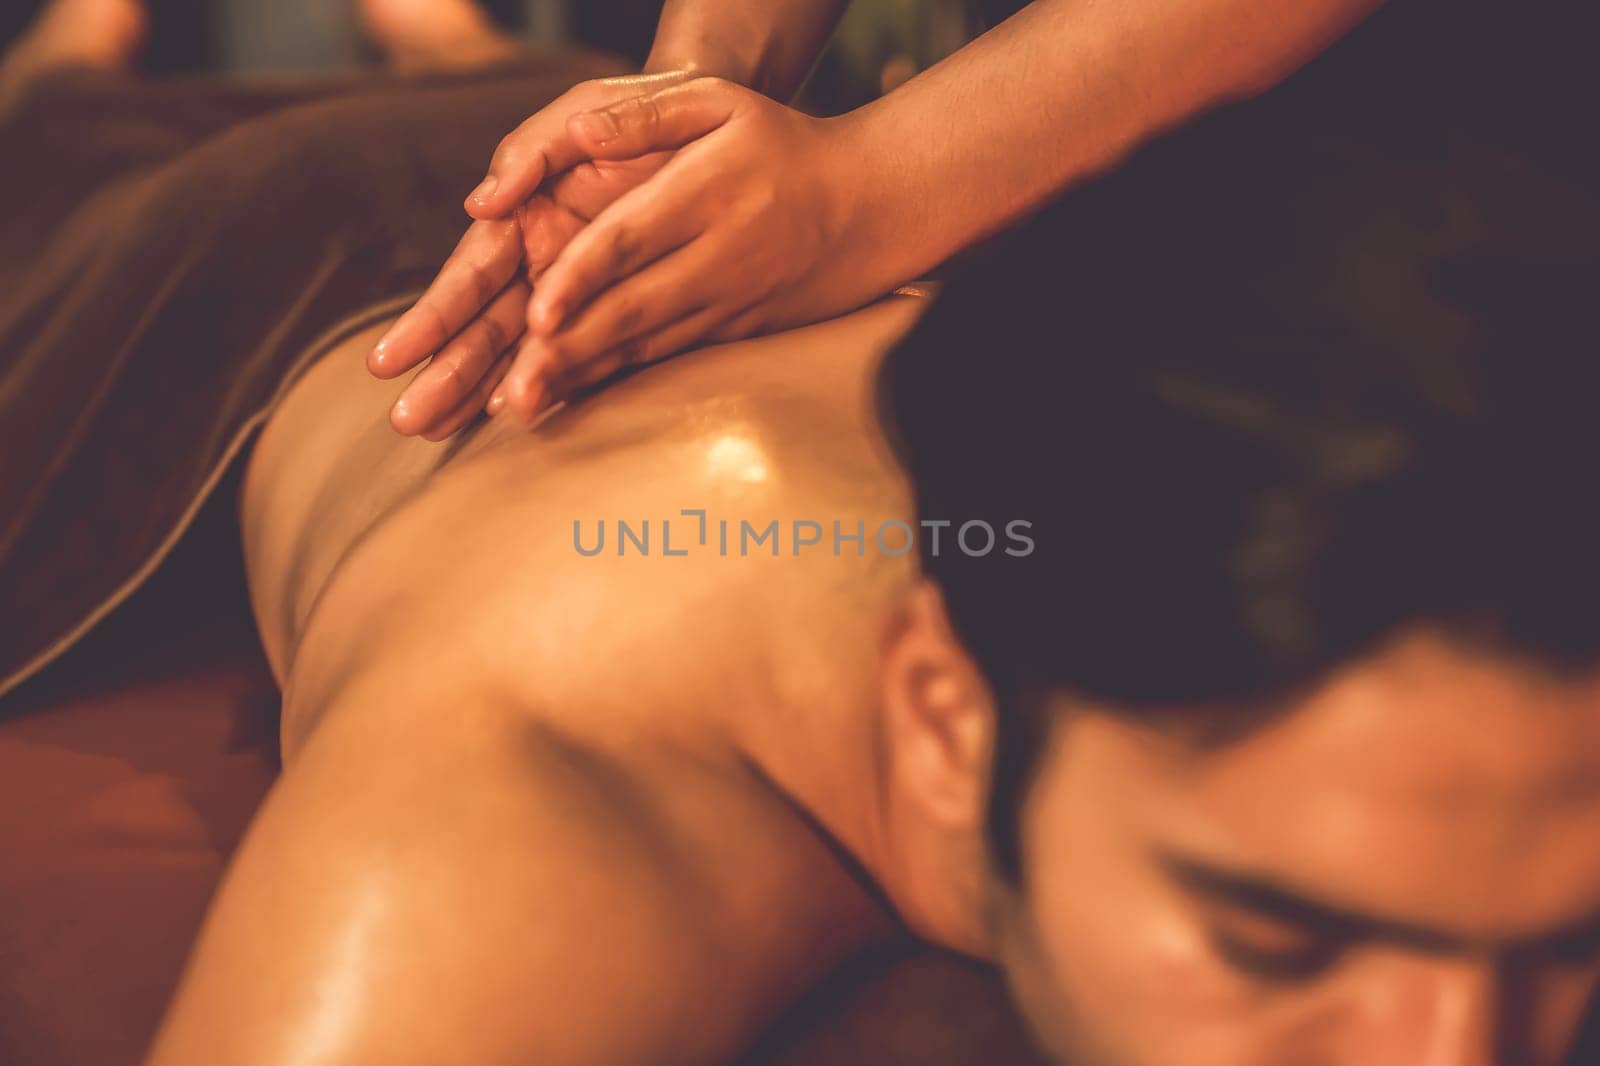 Caucasian man customer enjoying relaxing anti-stress massage. Quiescent by biancoblue